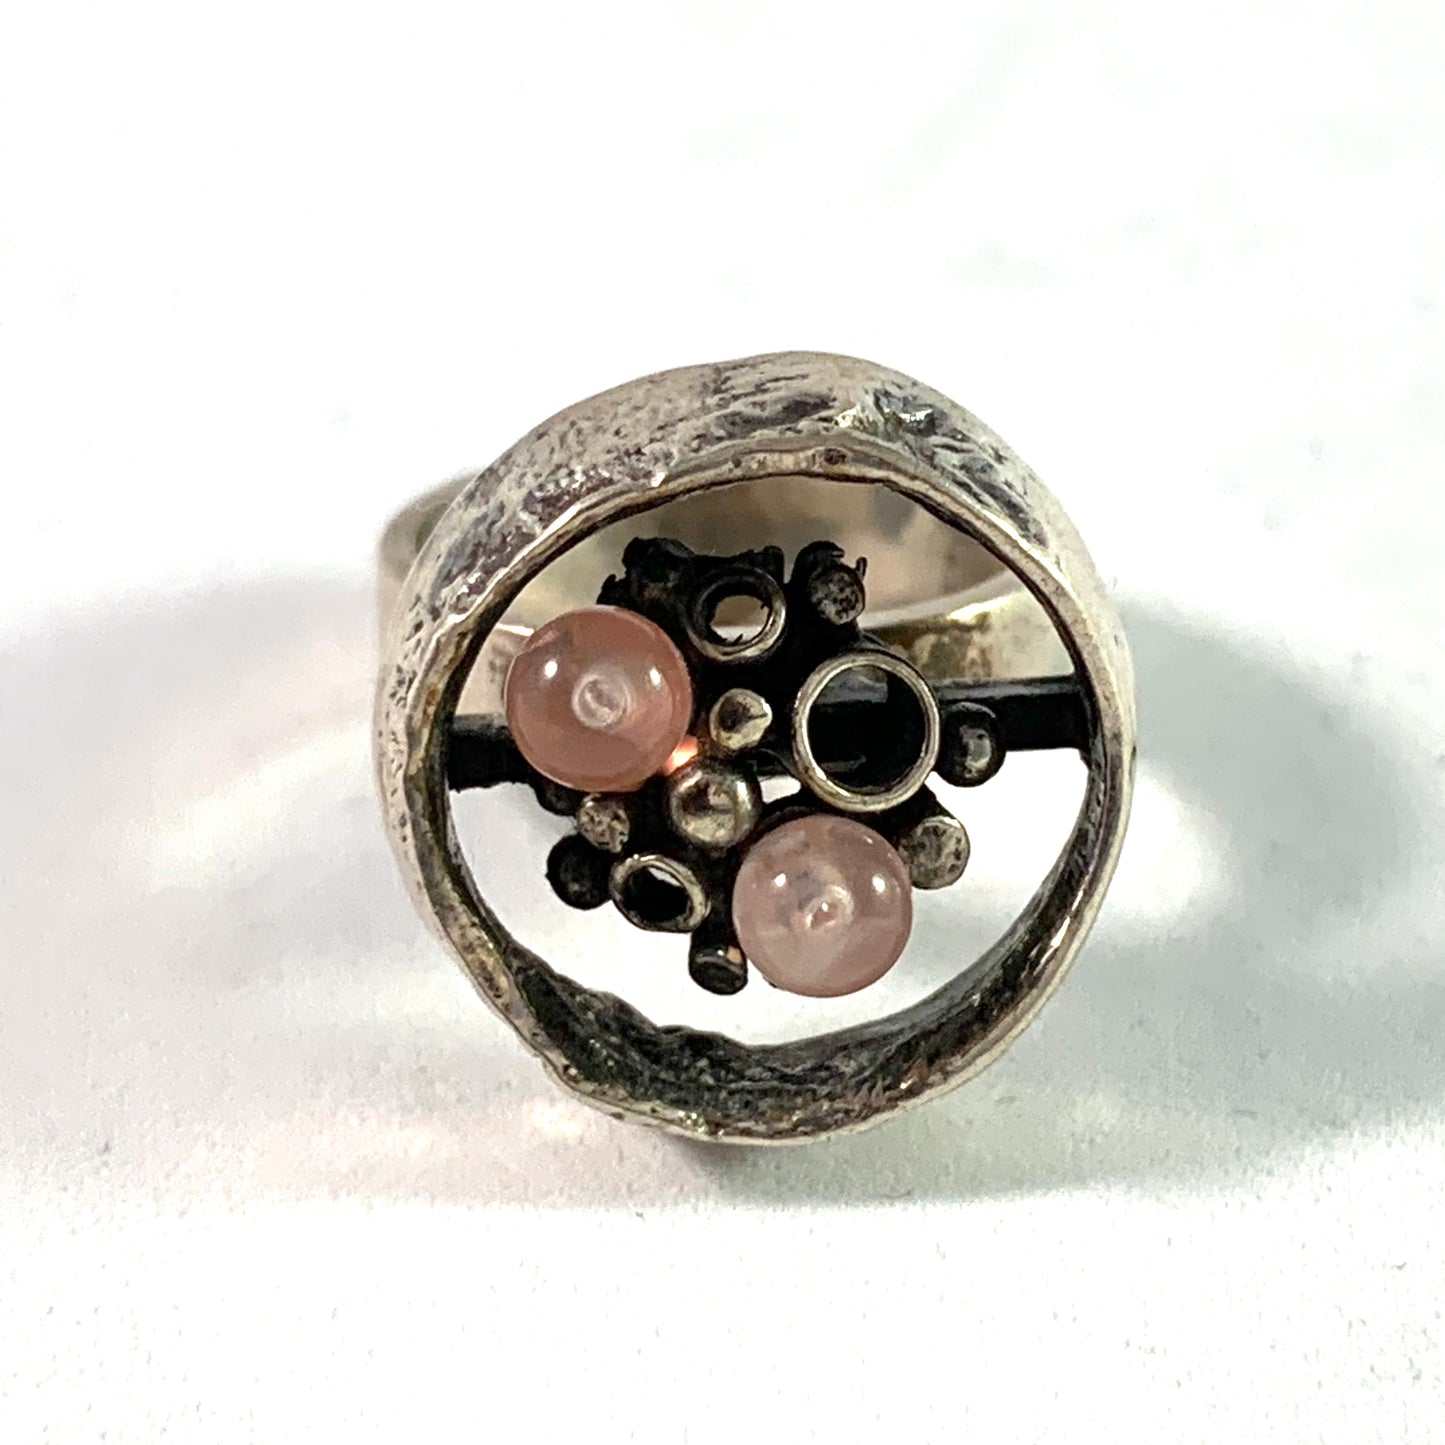 Perli, Germany Modernist Rose Quartz Silver Ring.